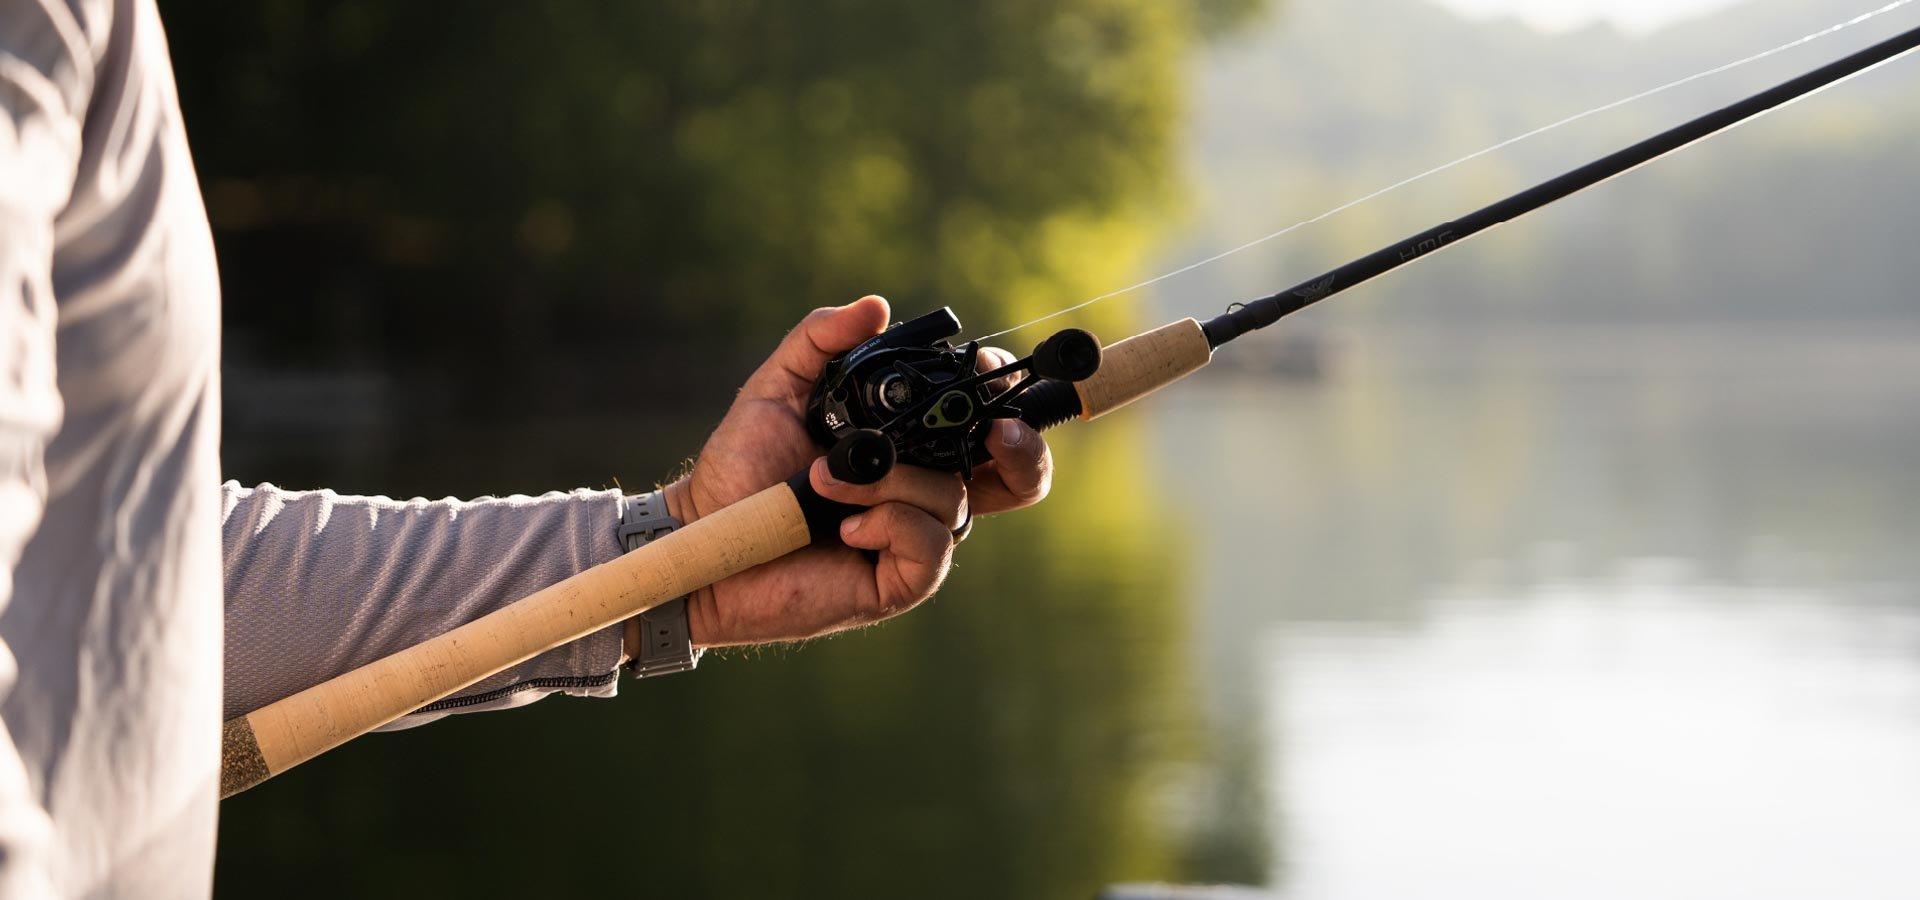 The Best Trout Fishing Rod ??? [ Fenwick HMX Rod Review ] St